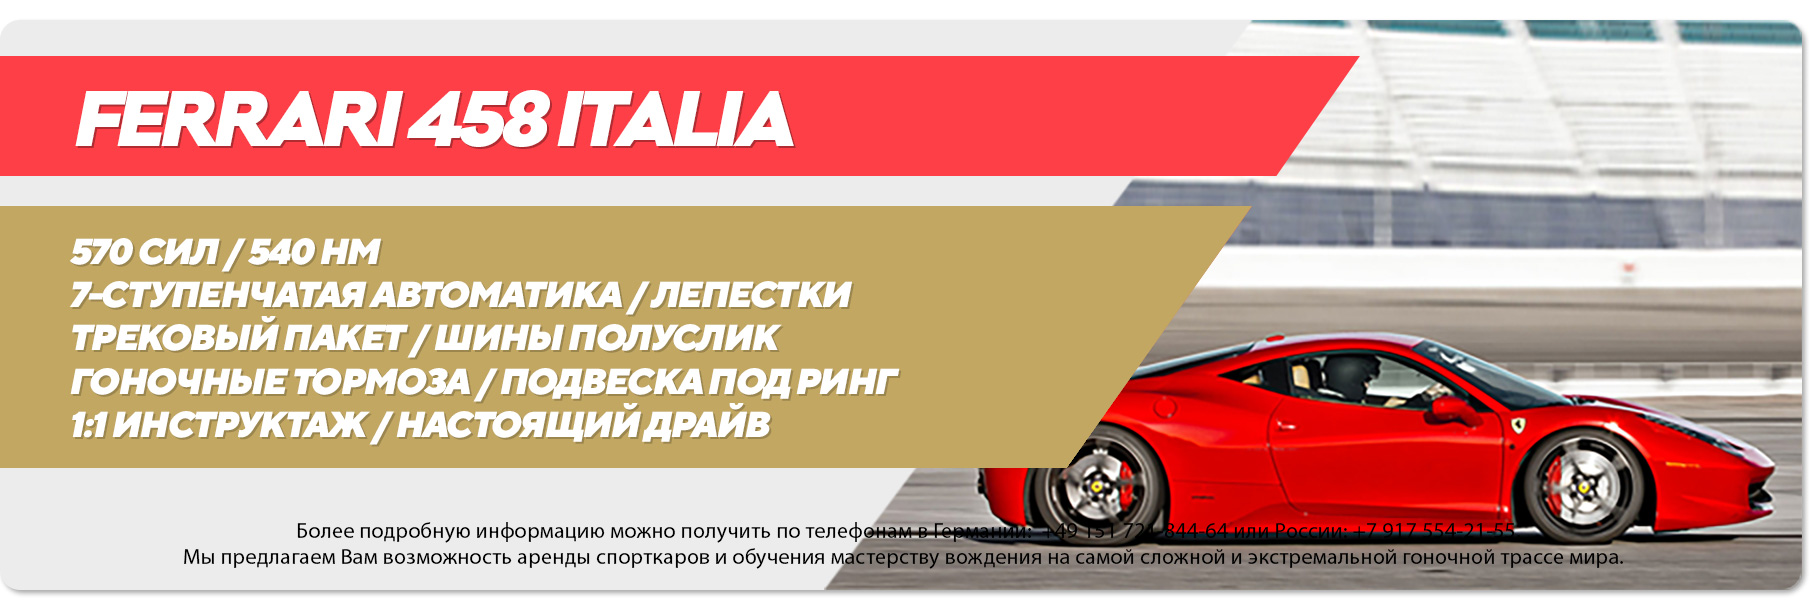 Подарок 23 февраля гонки на Ferrari Italia